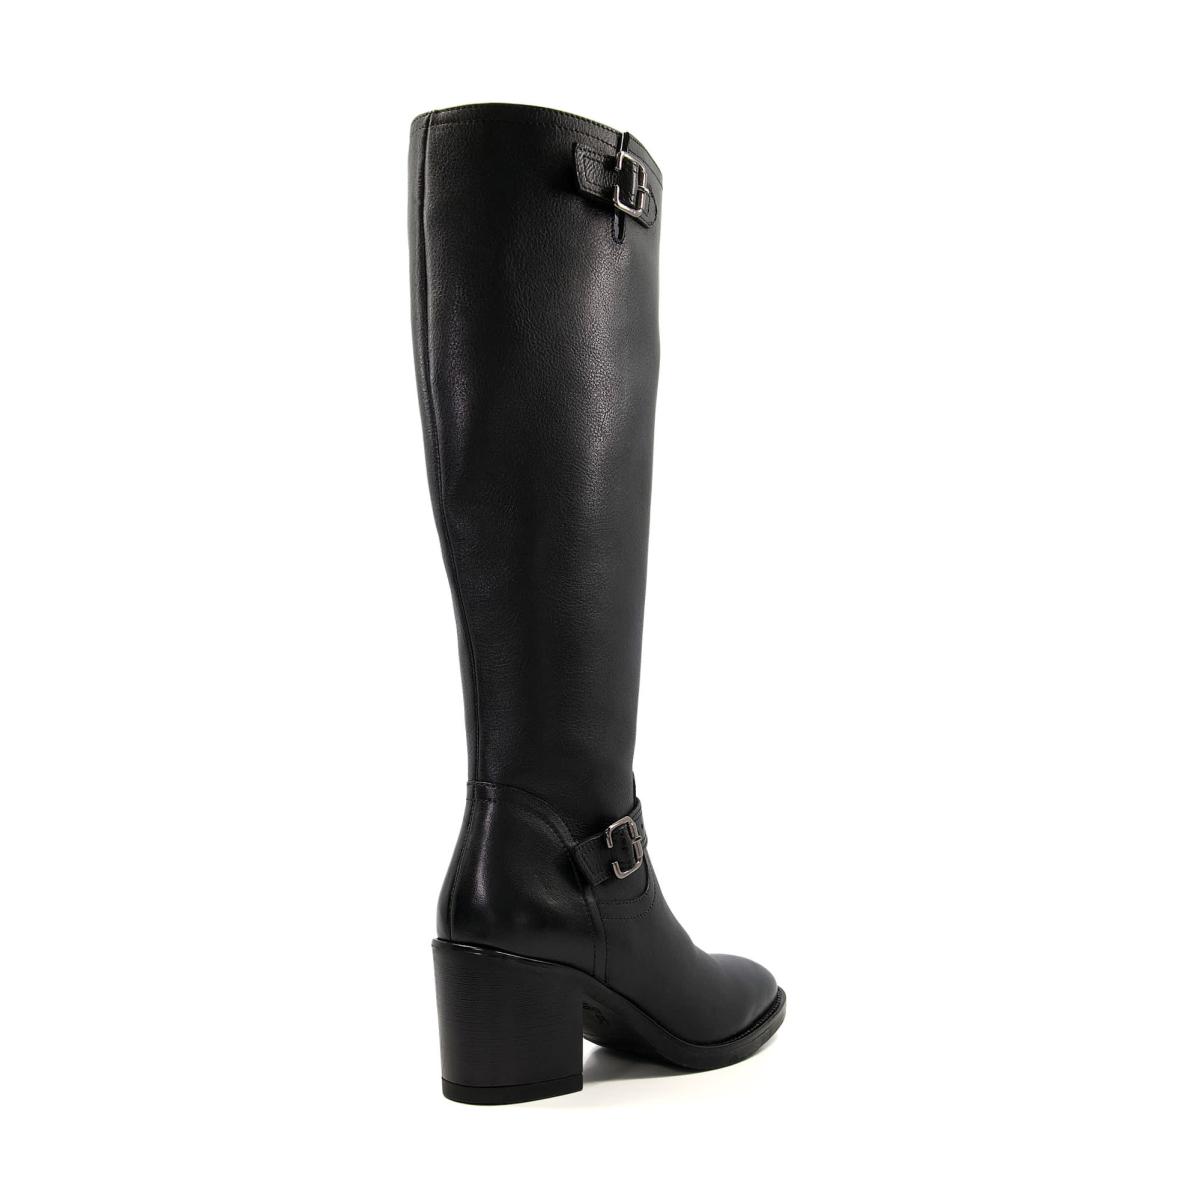 Knee High Boots Trelise - Black Dune London Women - 5